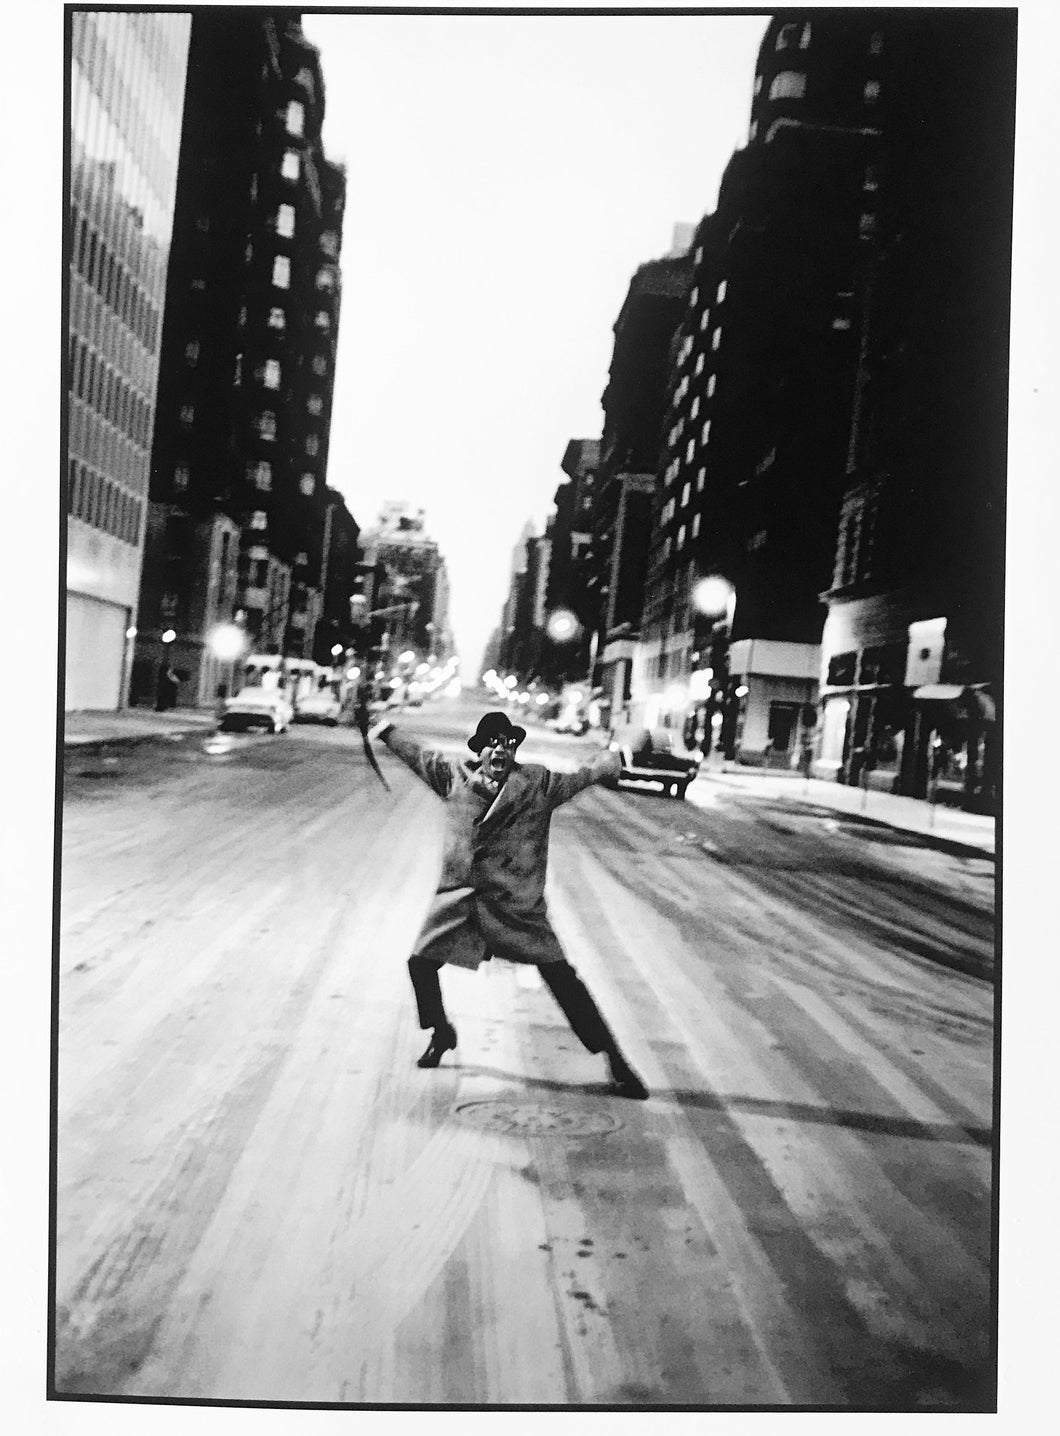 Sammy Davis Junior, New York City, Black and White Portrait Photography 1950s by Burt Glinn